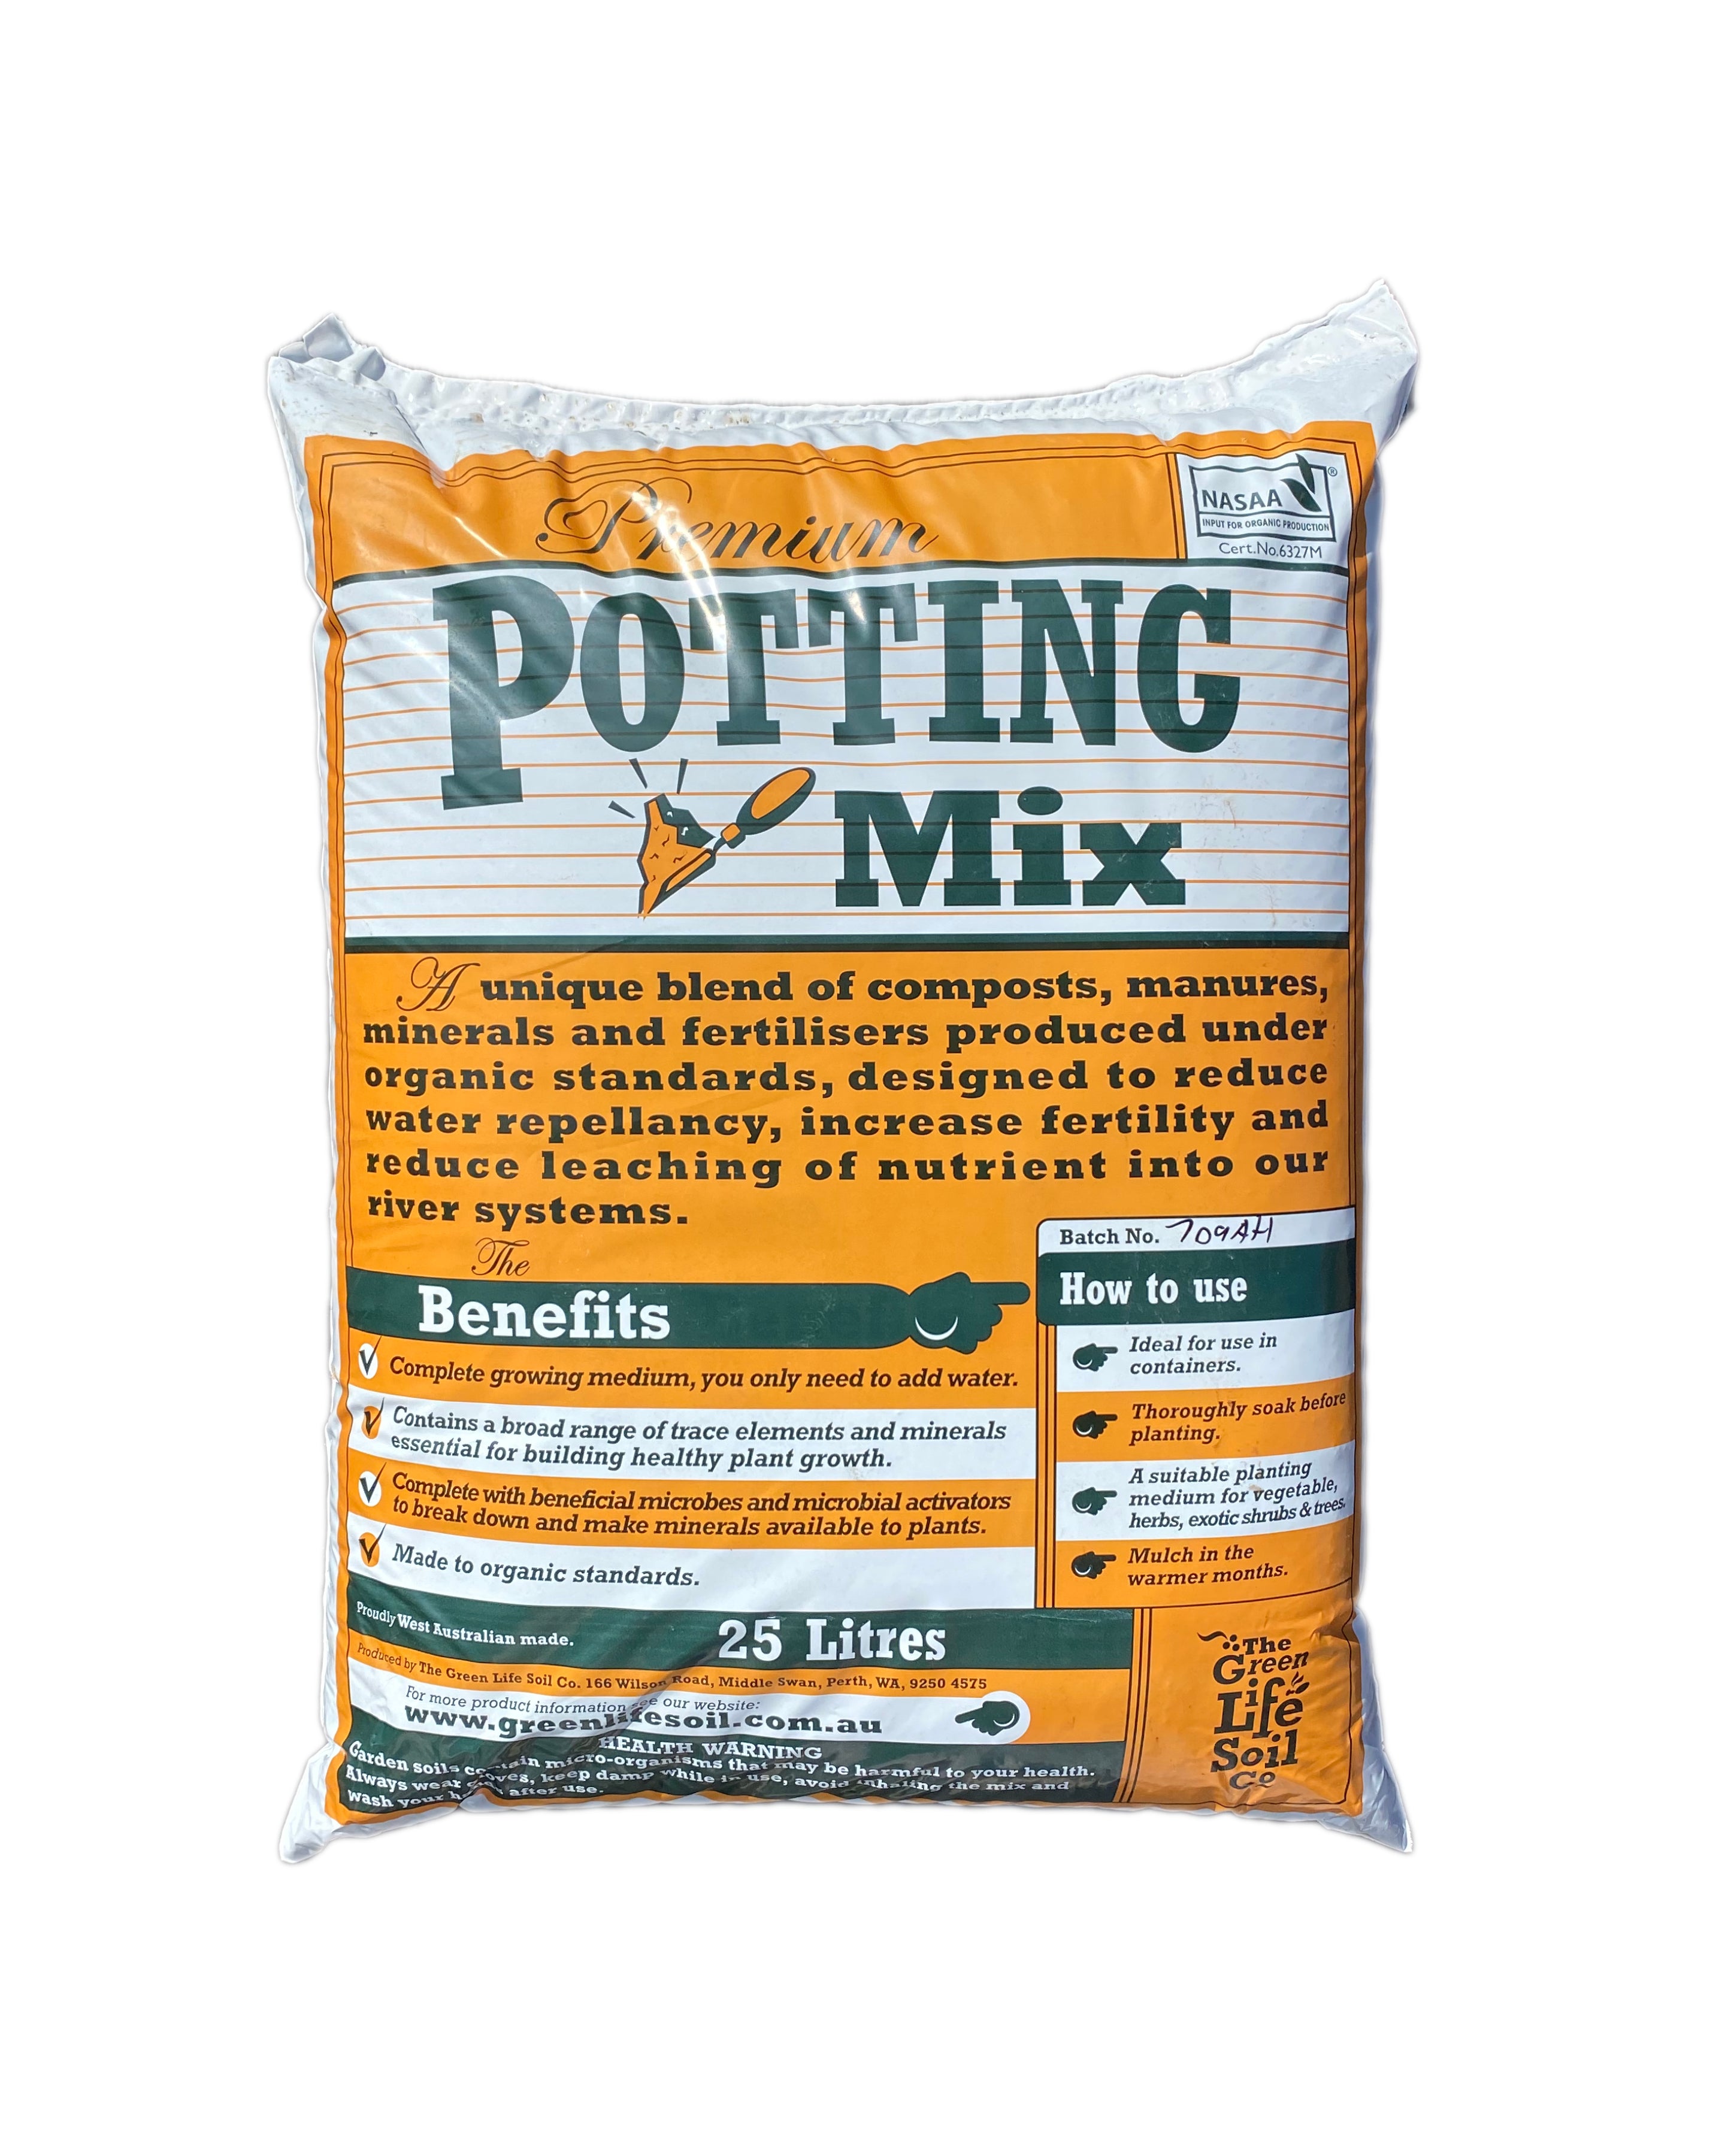 Organic Potting Mix